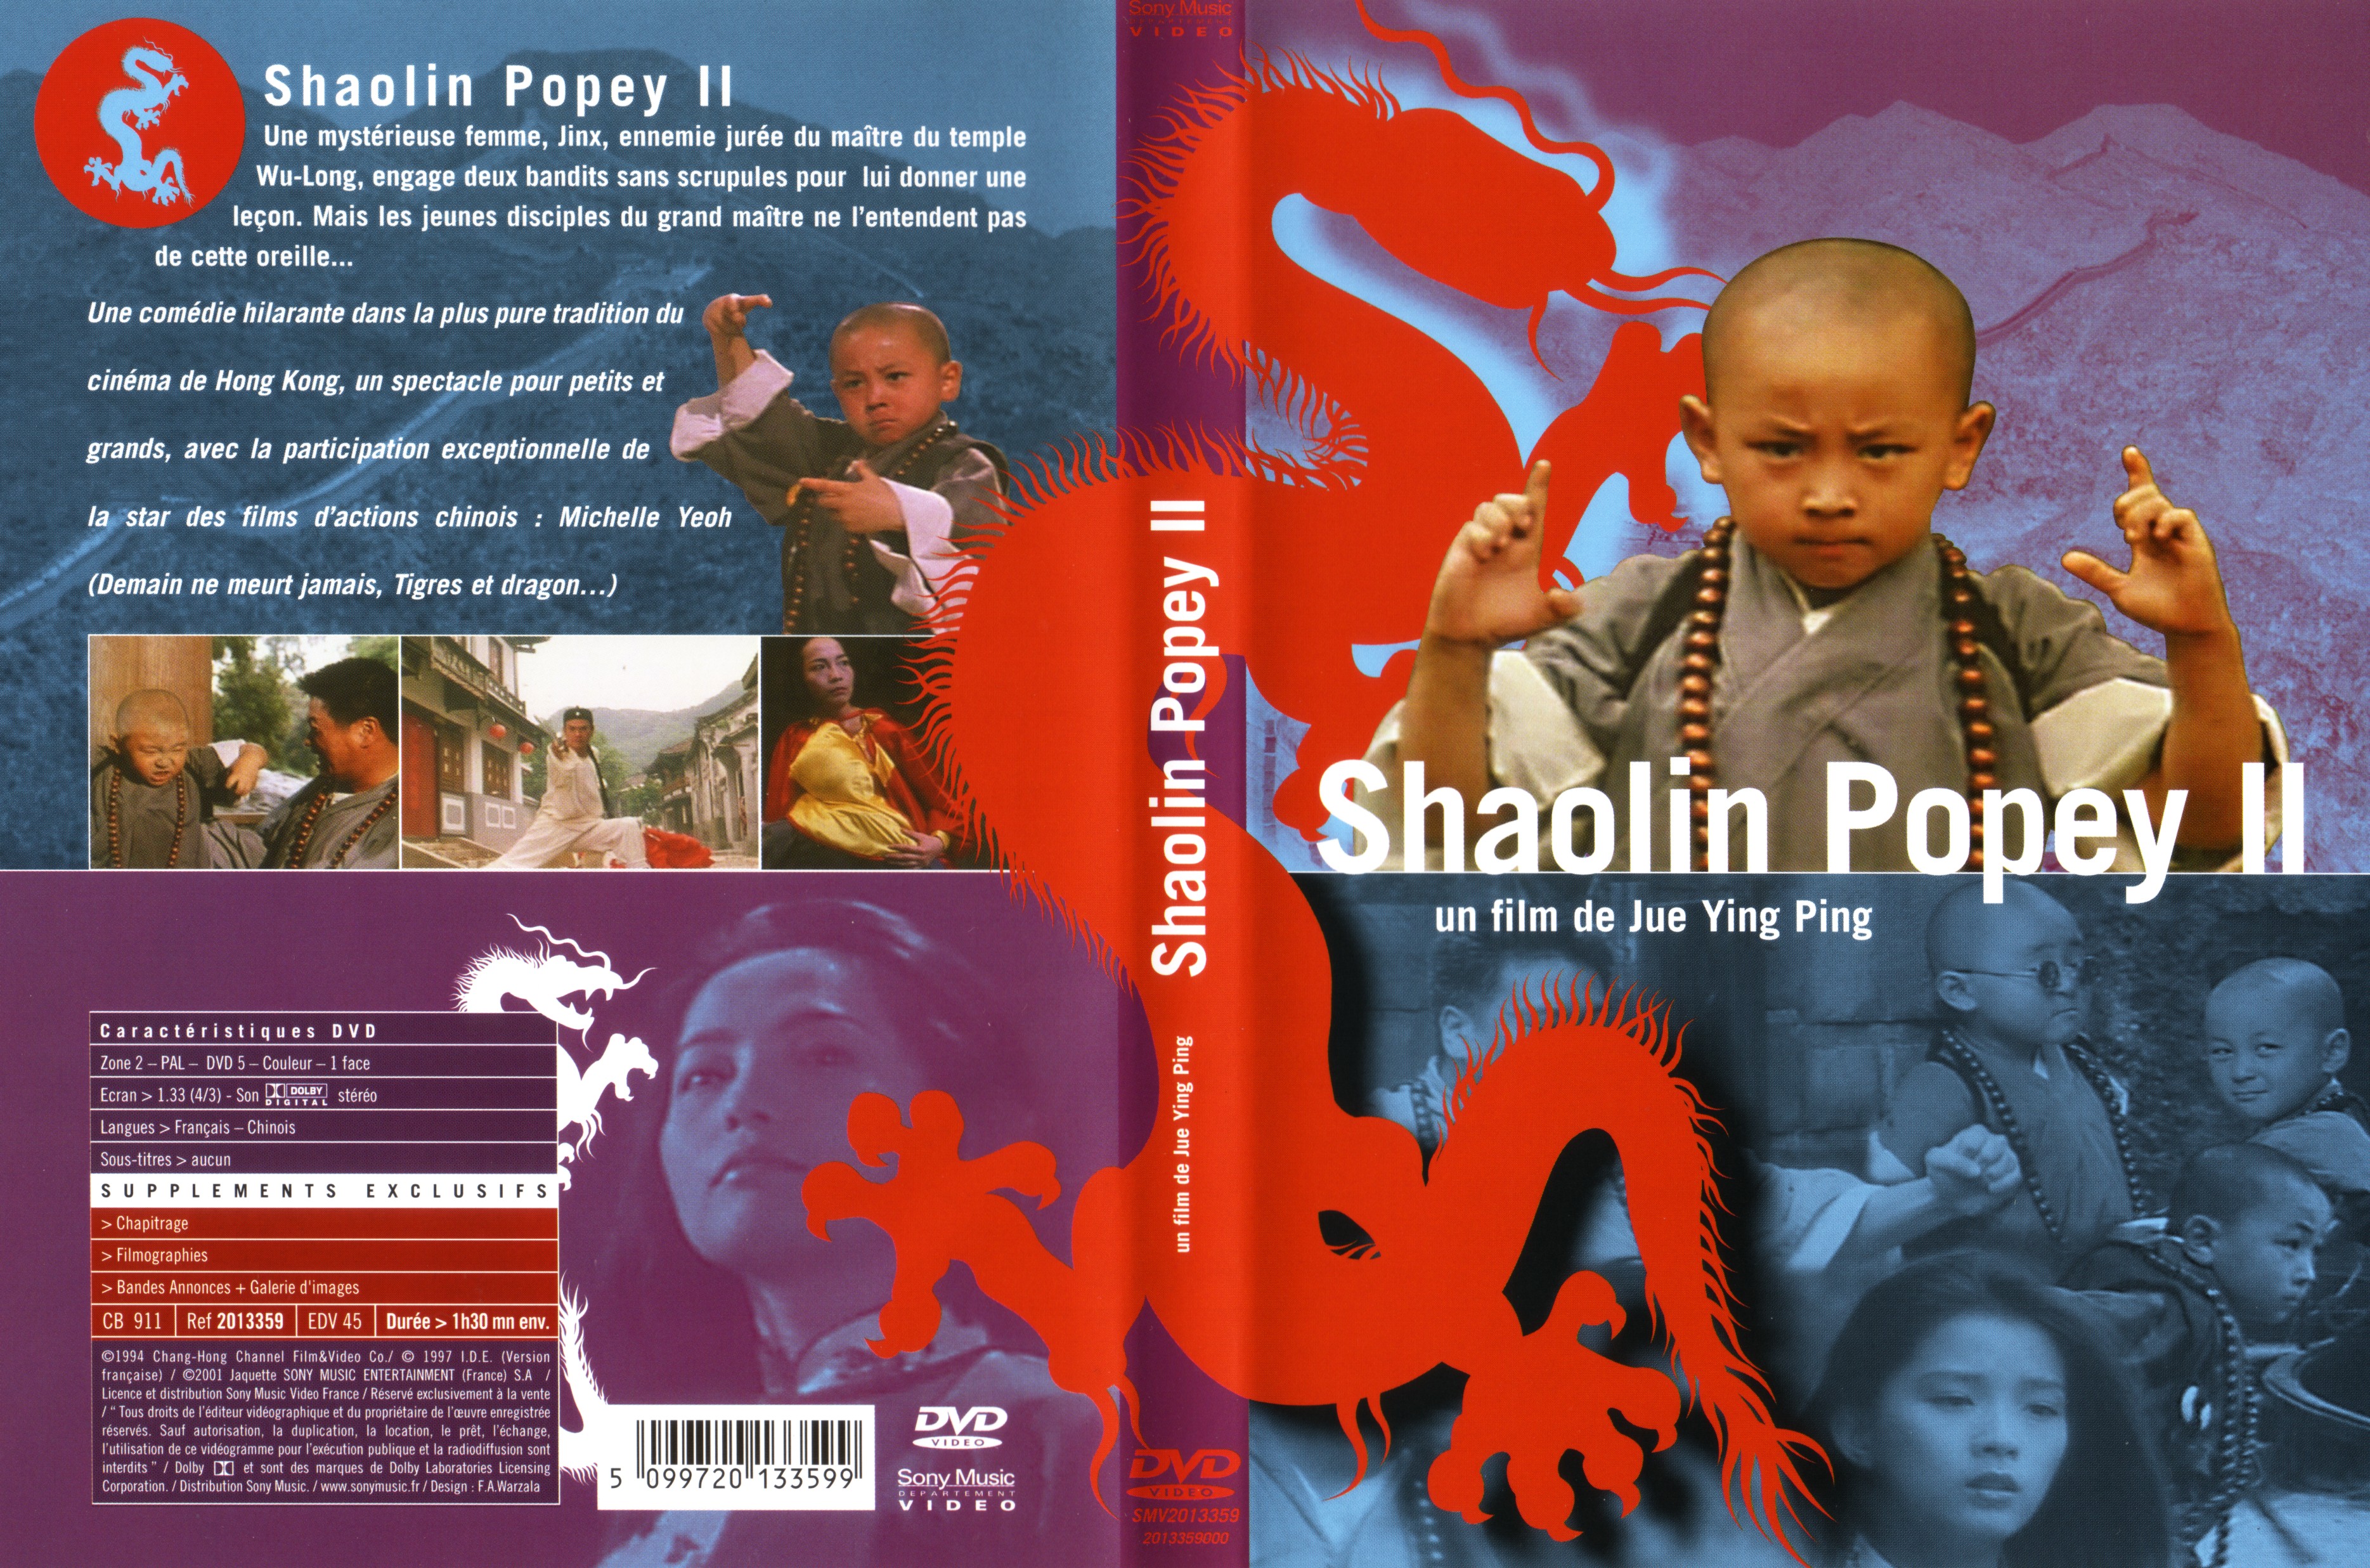 Shaolin popey cast